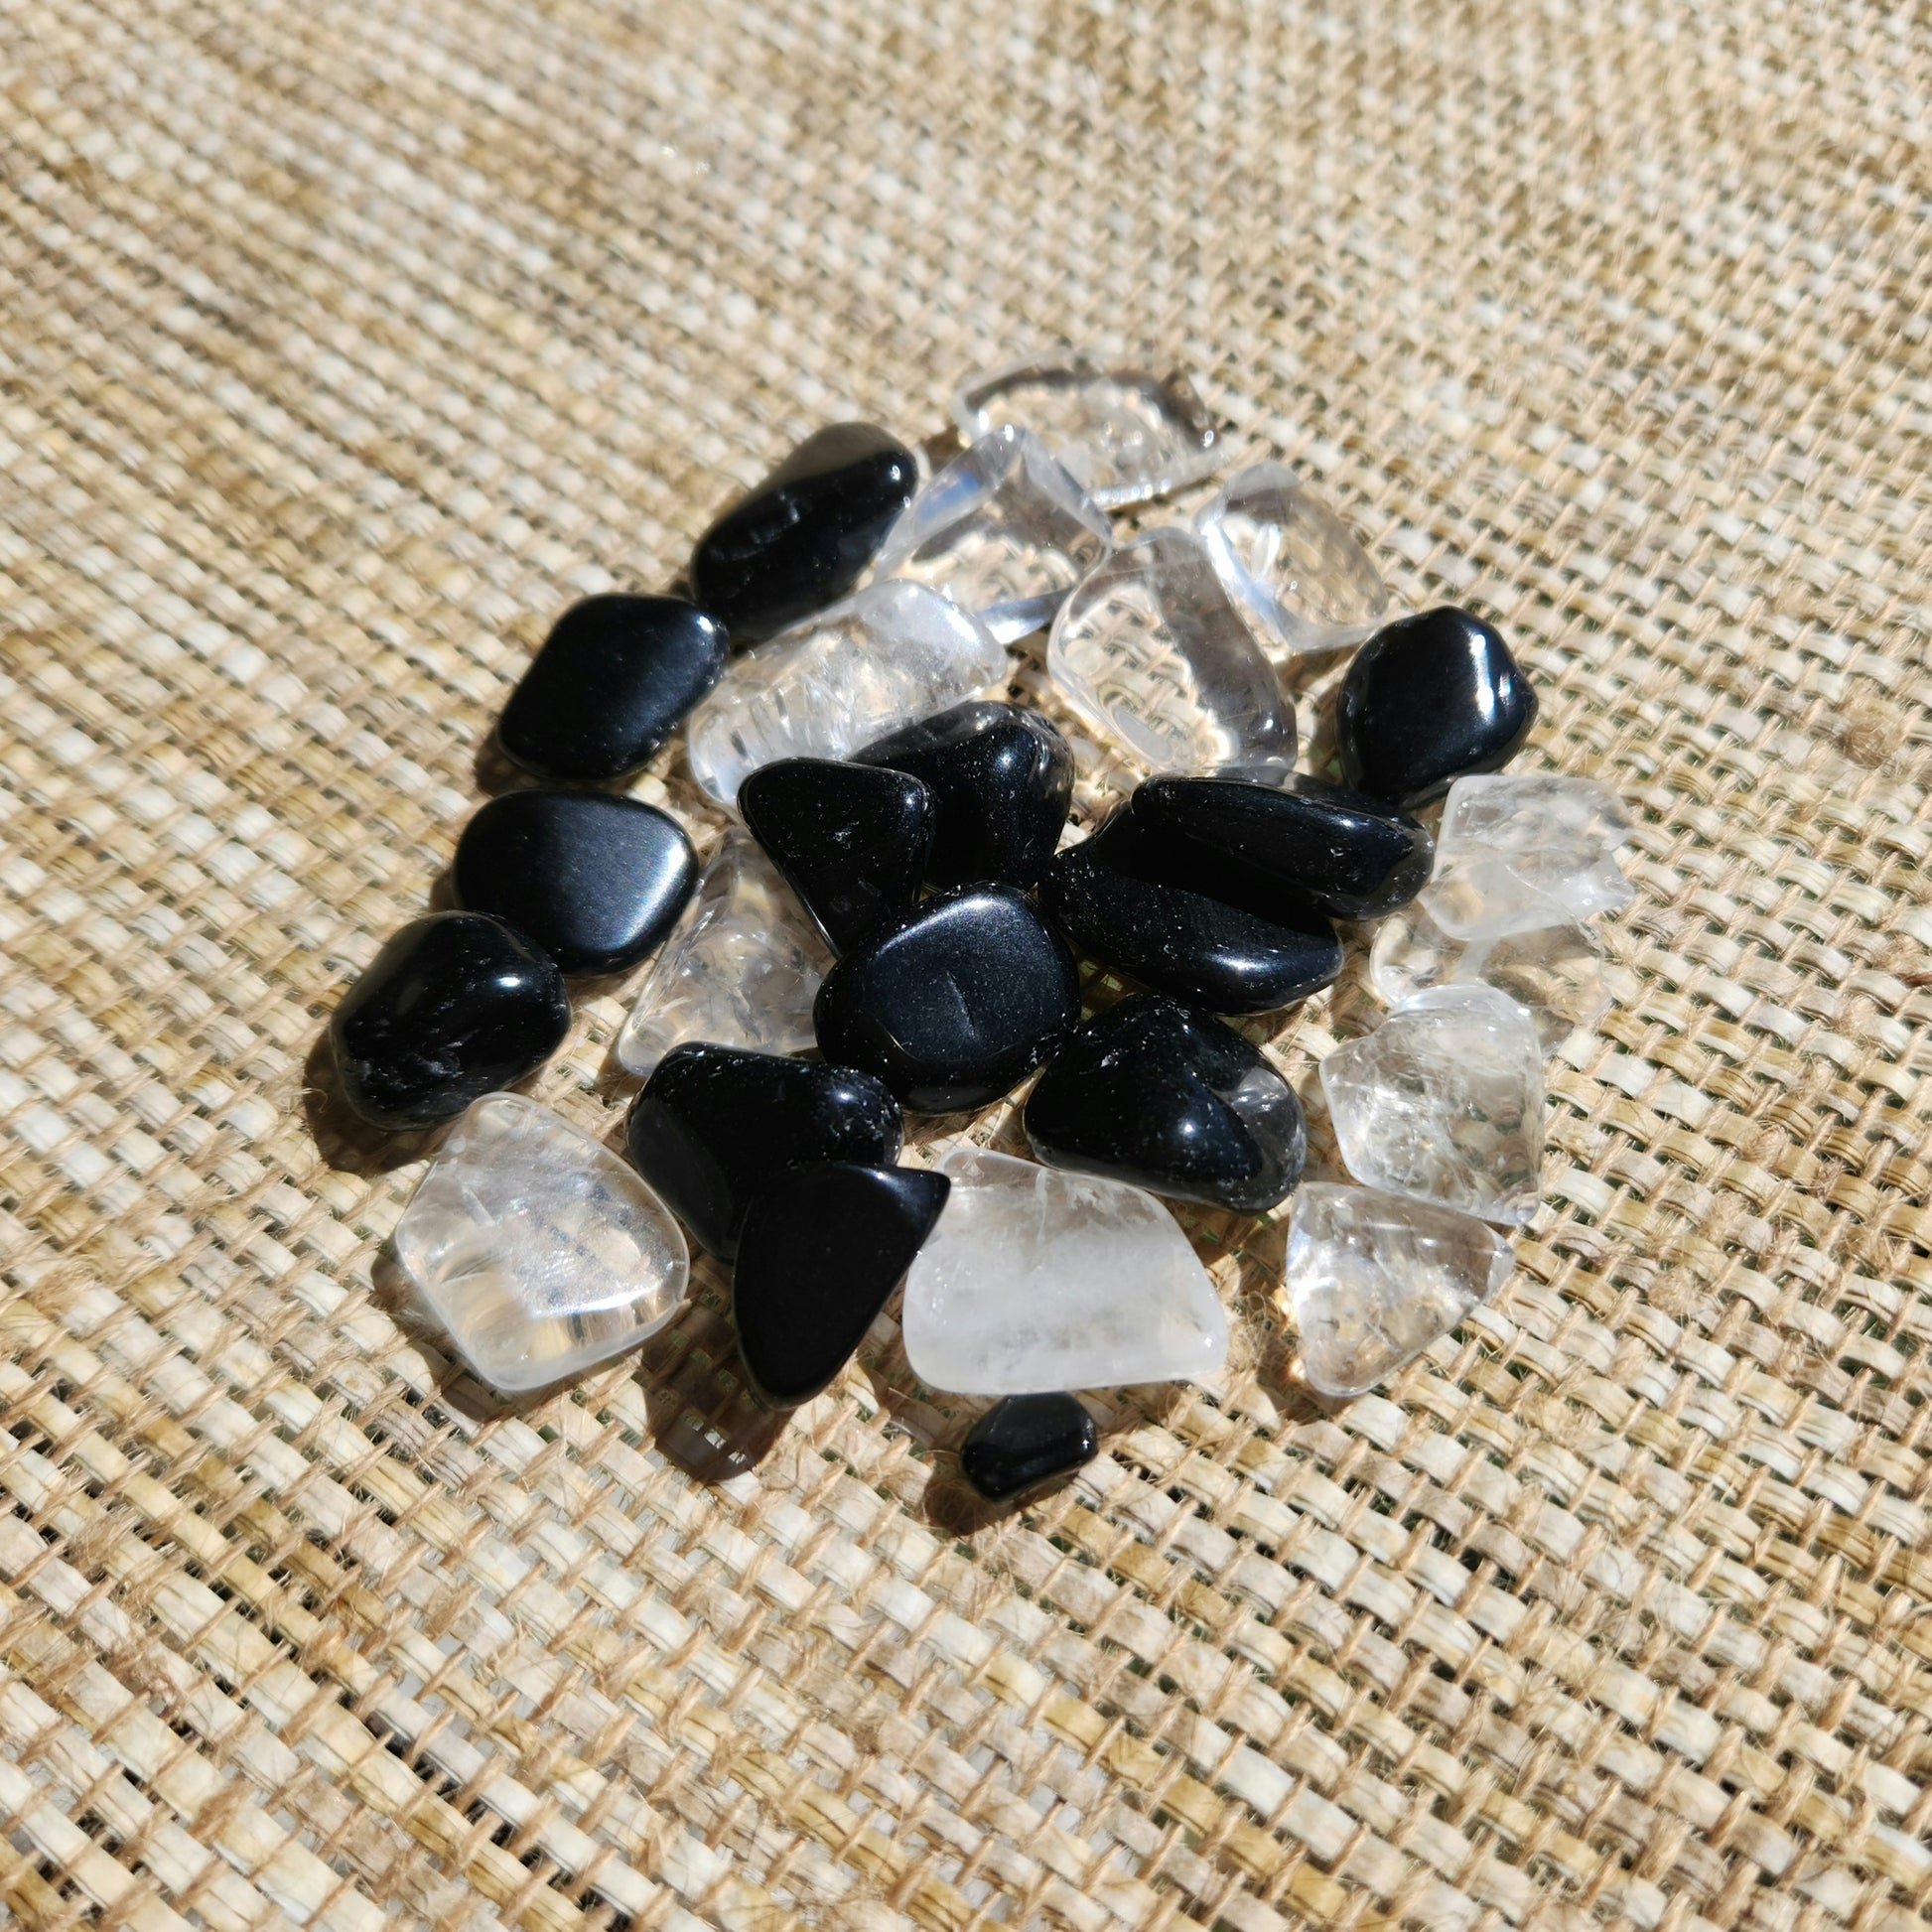 Clear Quartz and Black Obsidian Mini Tumbles 50g